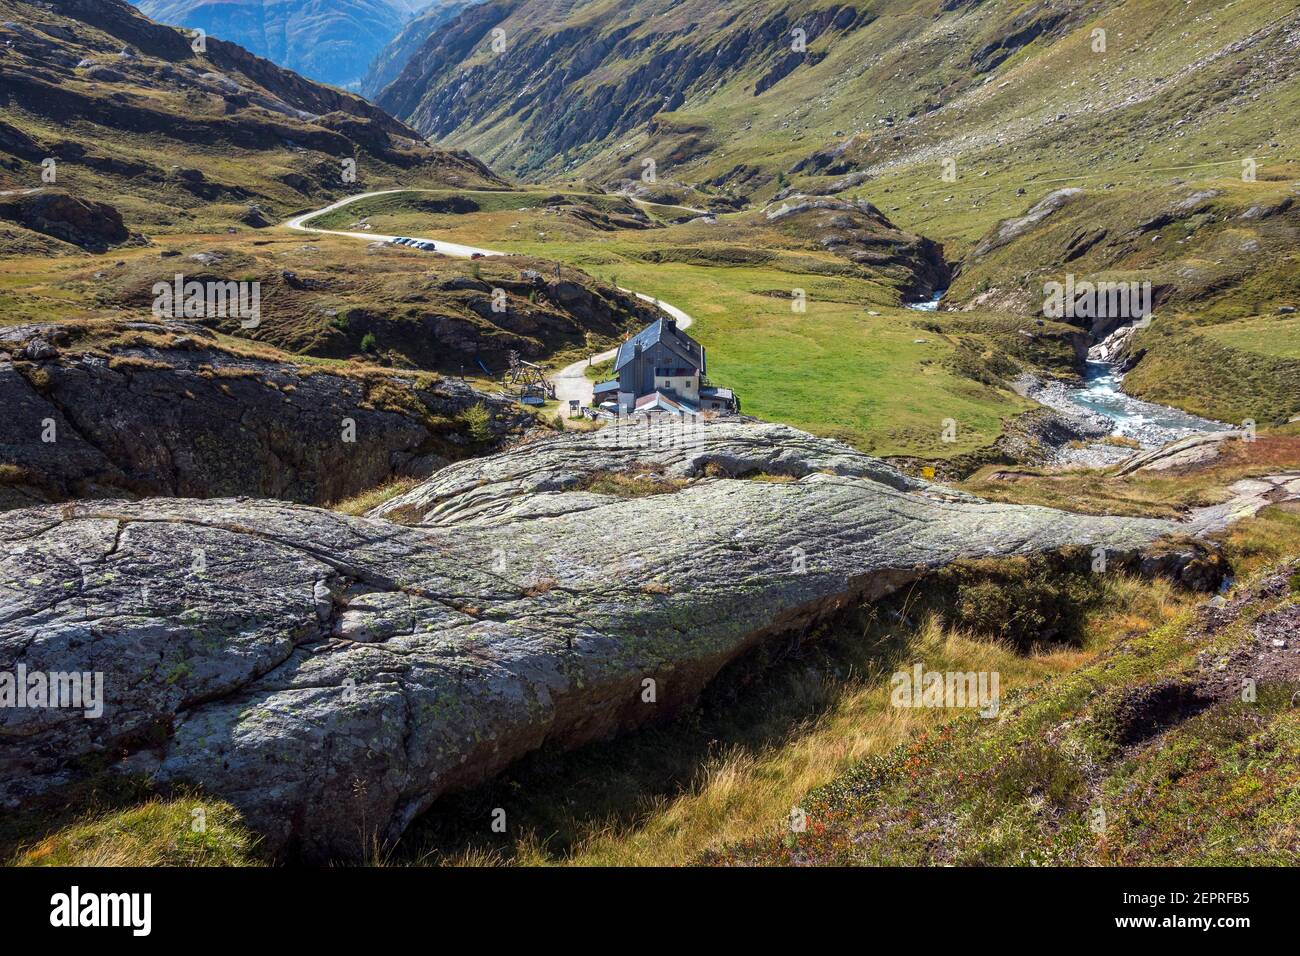 Geological features of smooth rocks near Johannishütte refuge. Dorfer valley. Venediger group. Virgental. Austrian Alps. Europe Stock Photo